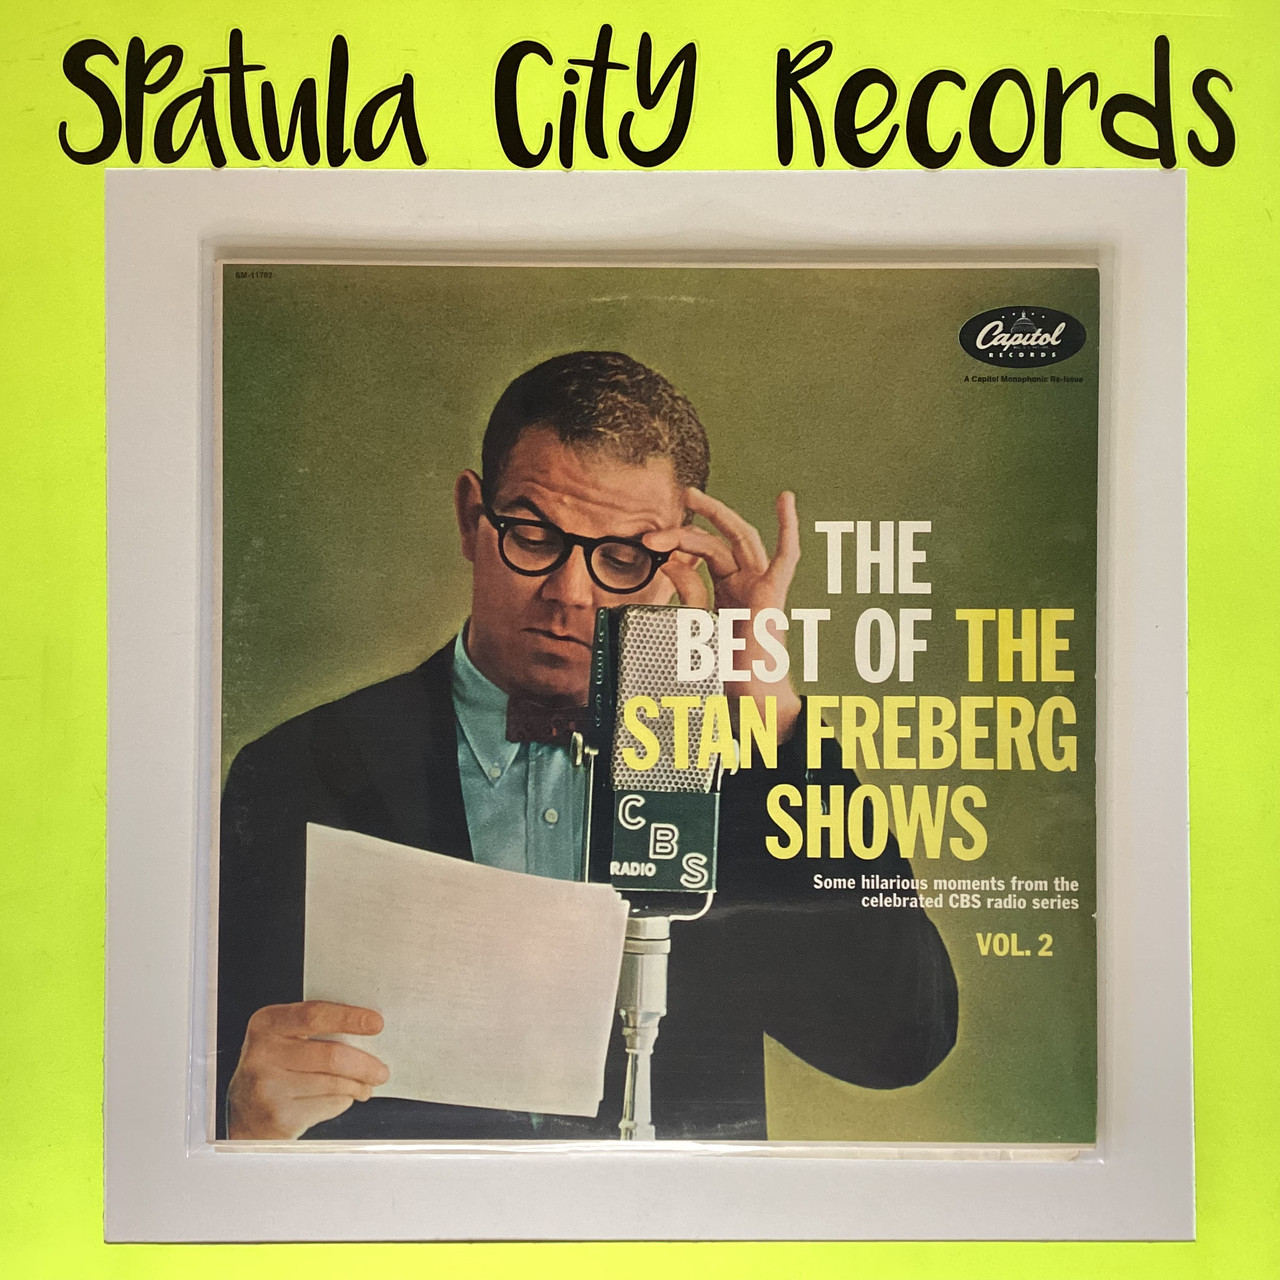 Stan Freberg – The Best Of The Stan Freberg Shows - Vol. 2 - MONO - vinyl record album LP